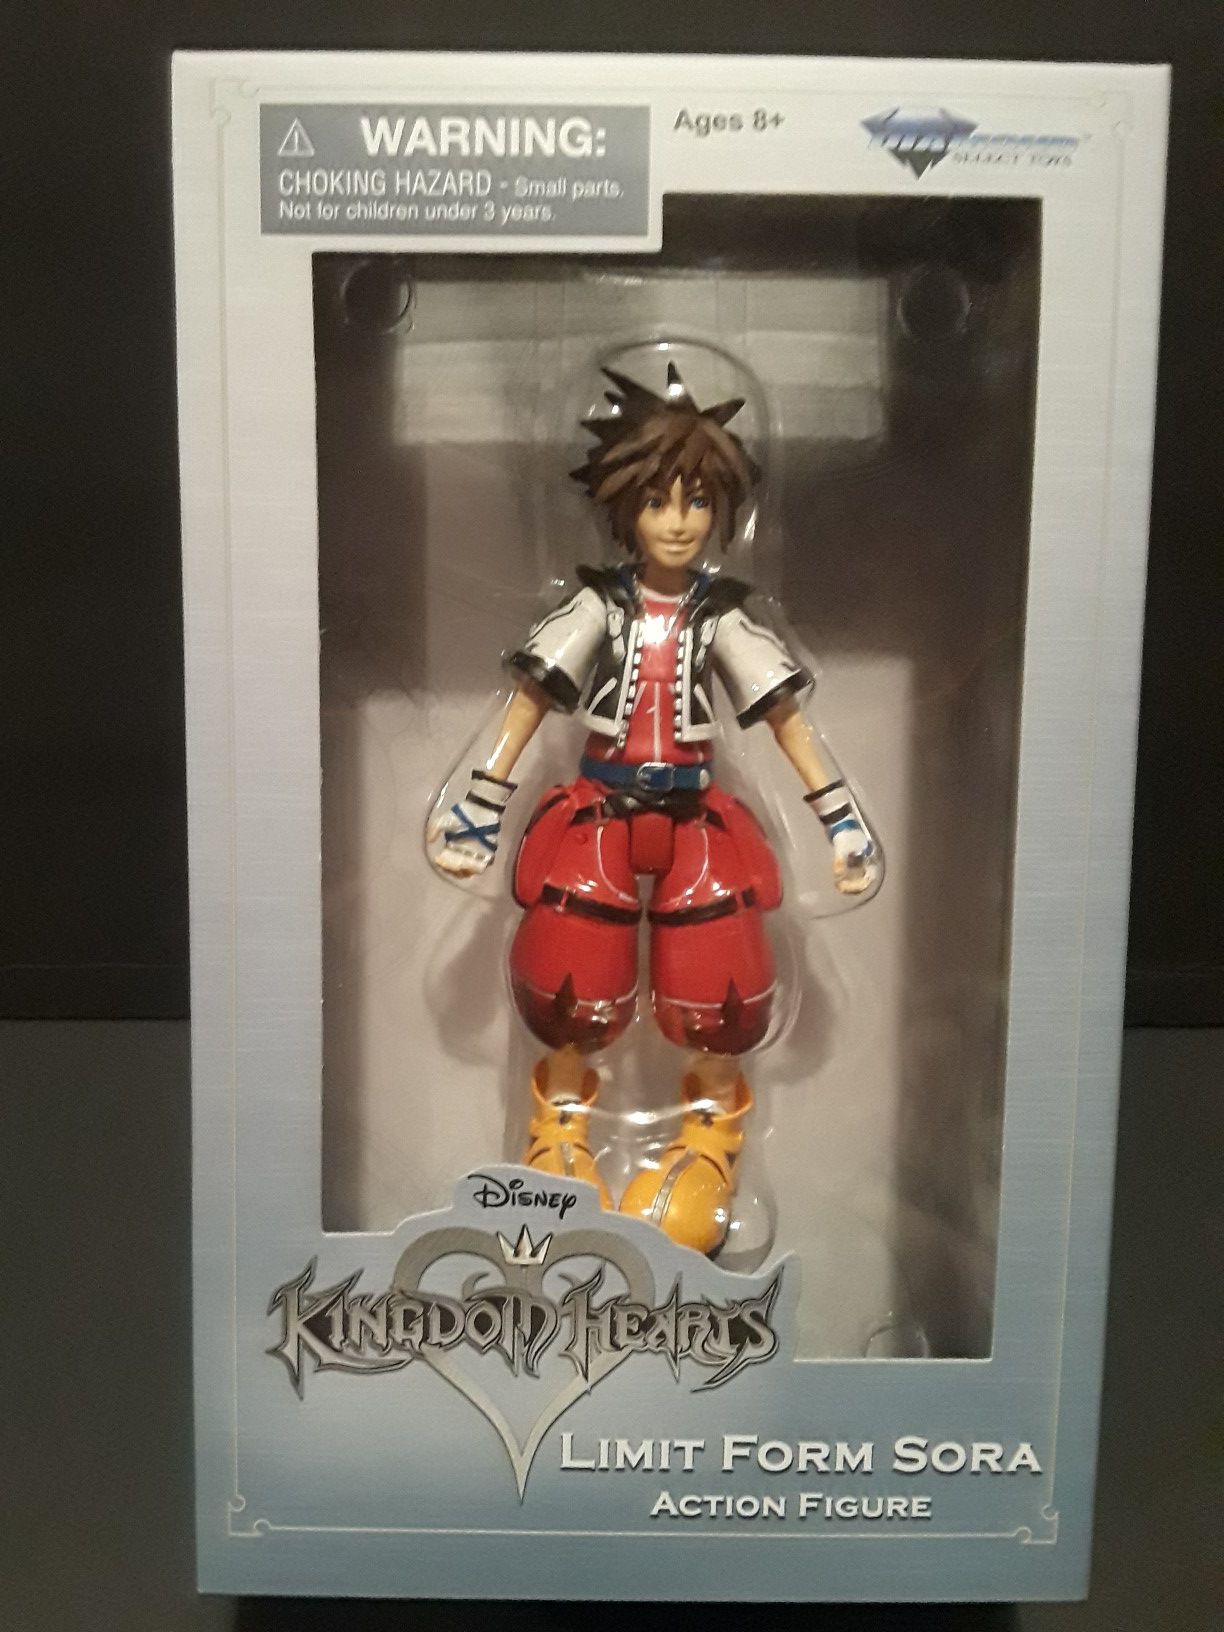 Disney Kingdom Hearts Limit Form Sora action figure.